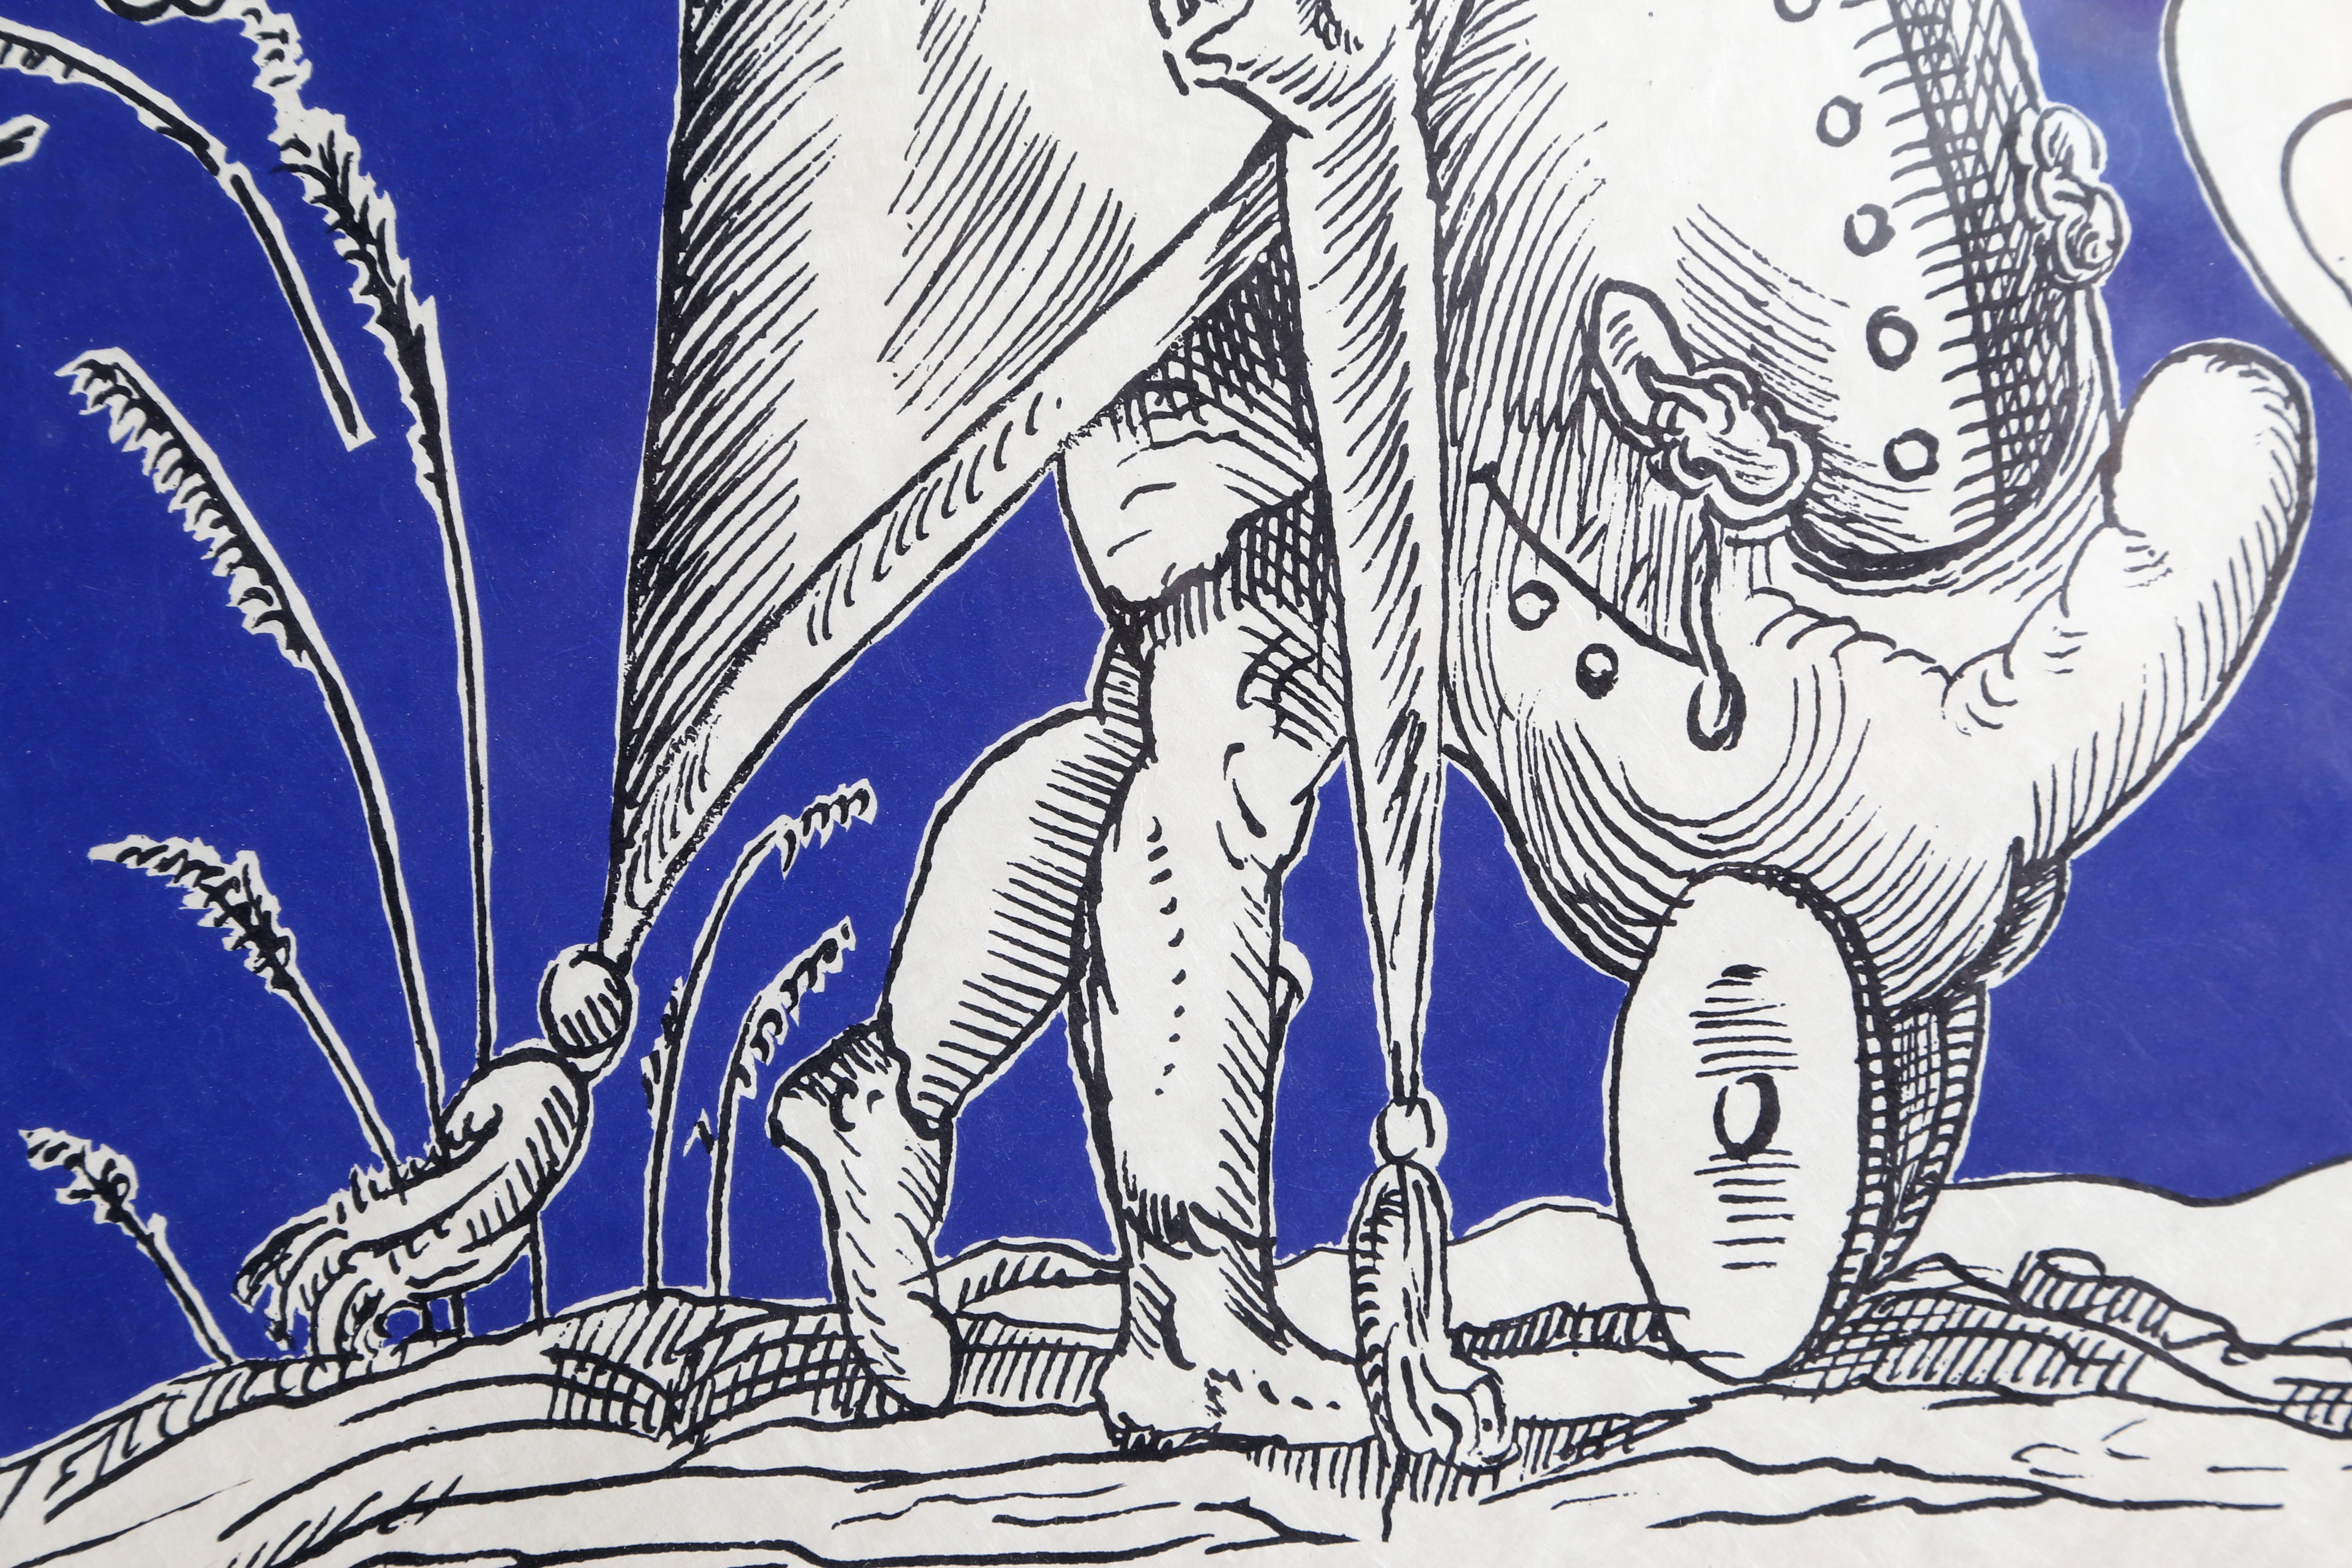 from Pantagruel's Comical Dreams, by Salvador Dali  - Surrealist Print by Salvador Dalí